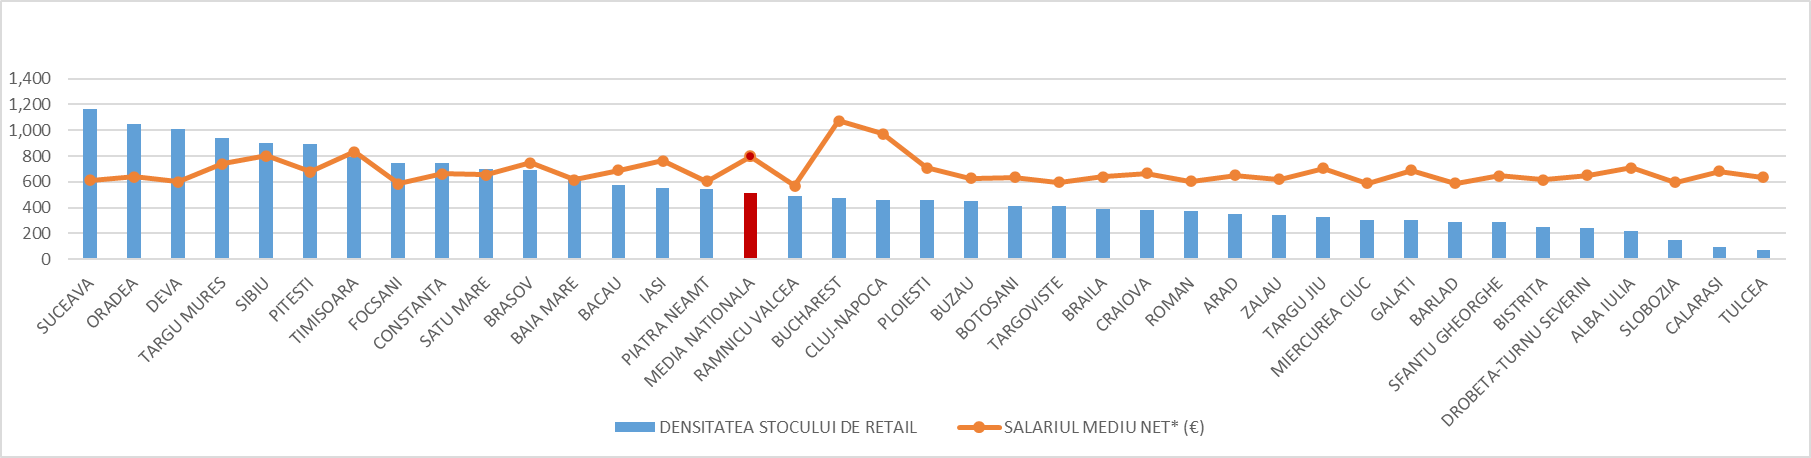 Densitatea stoc de retail /1.000 locuitori vs salariul mediu net